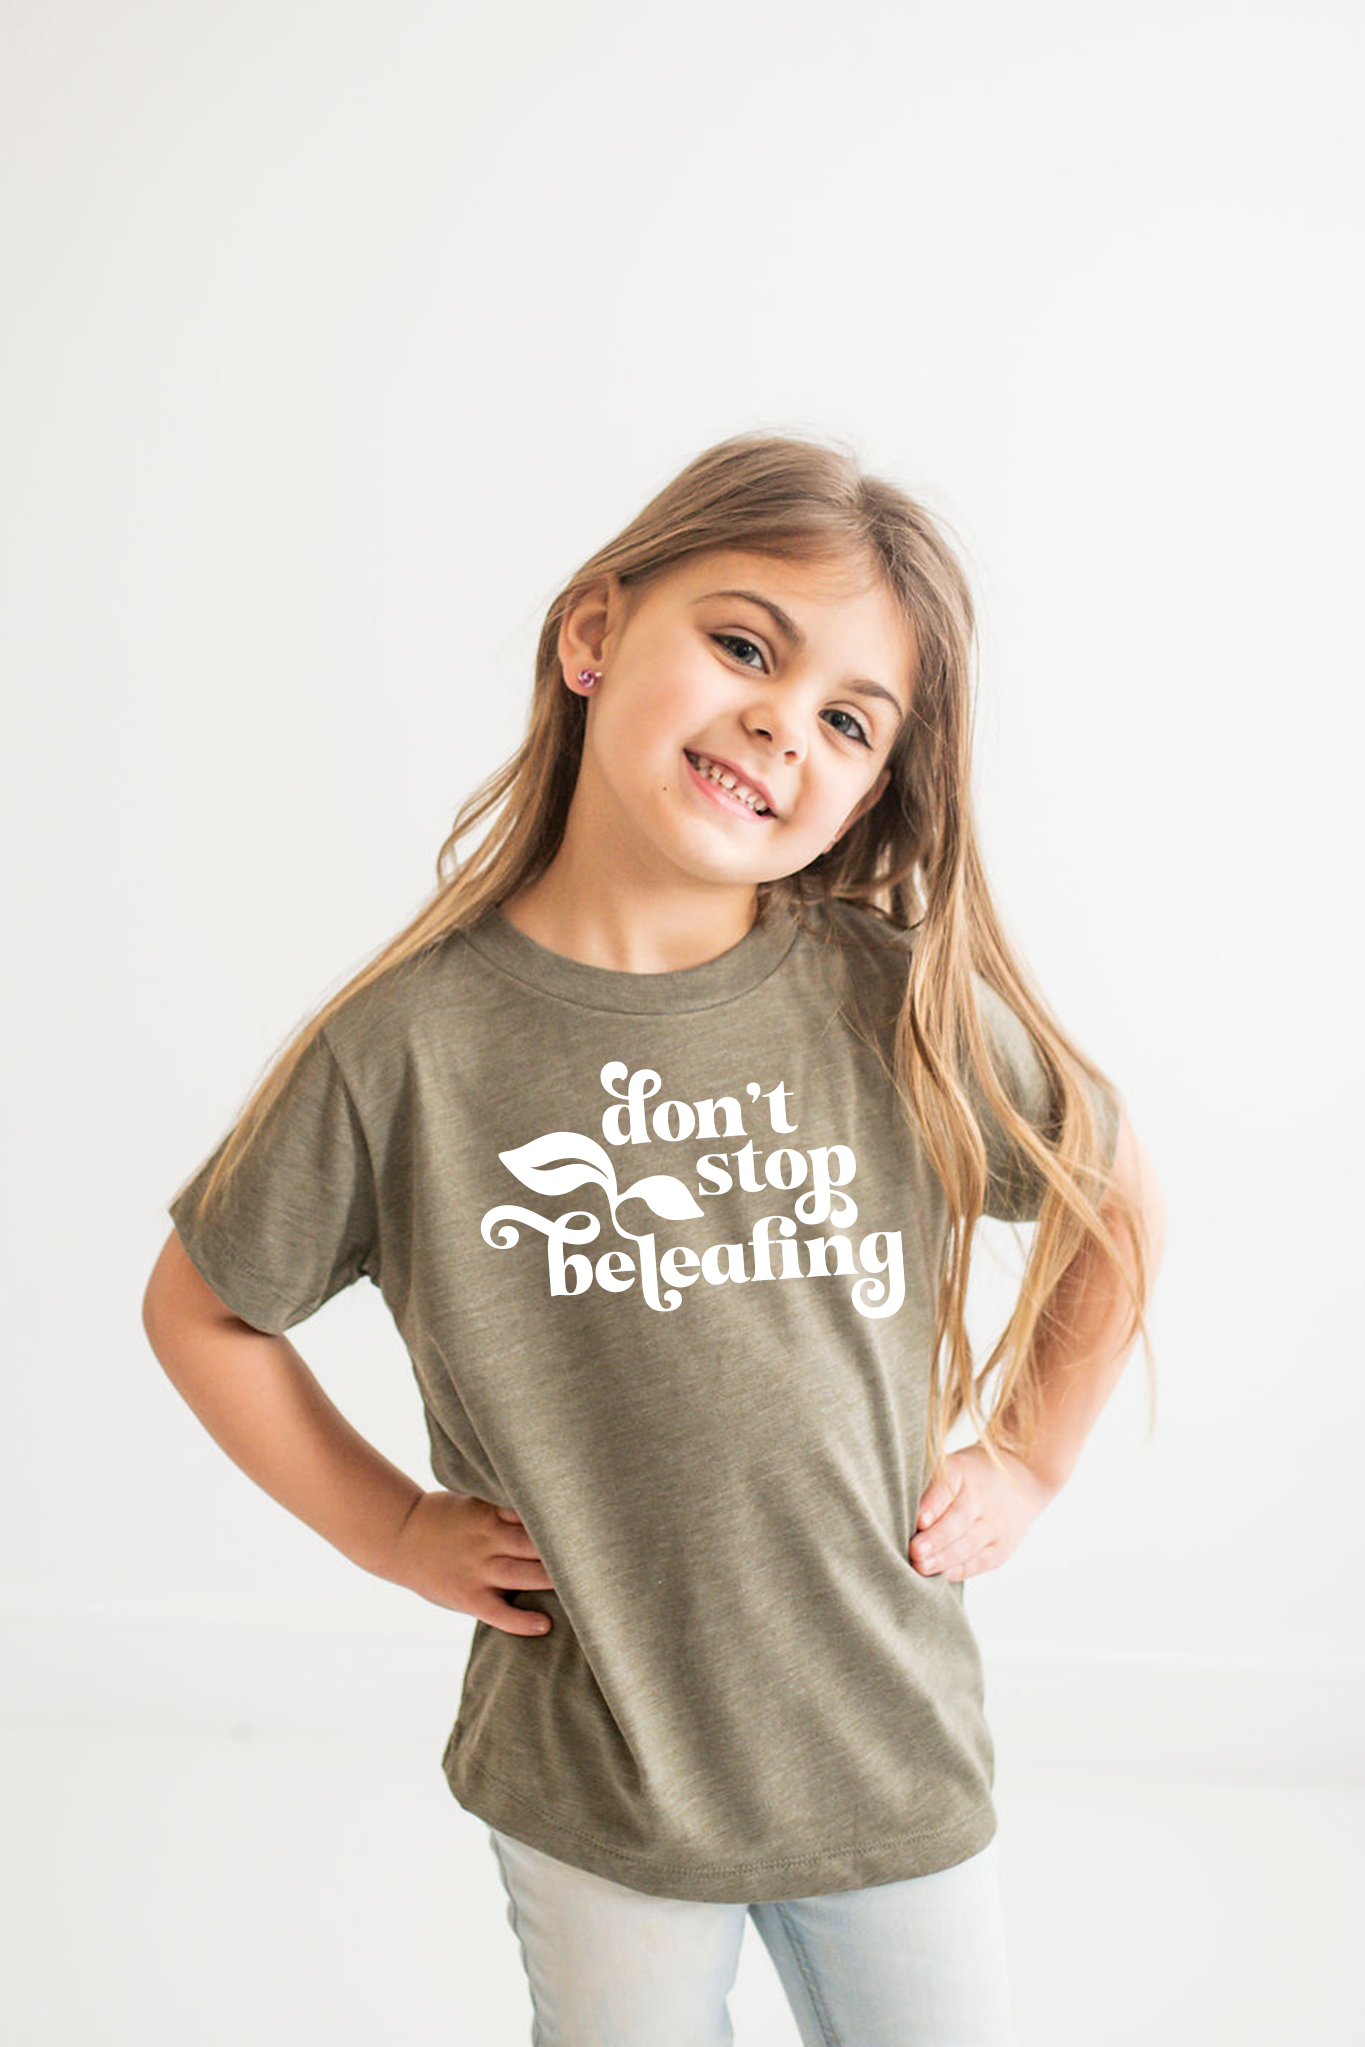 Don't Stop Beleafing Shirt - Kids